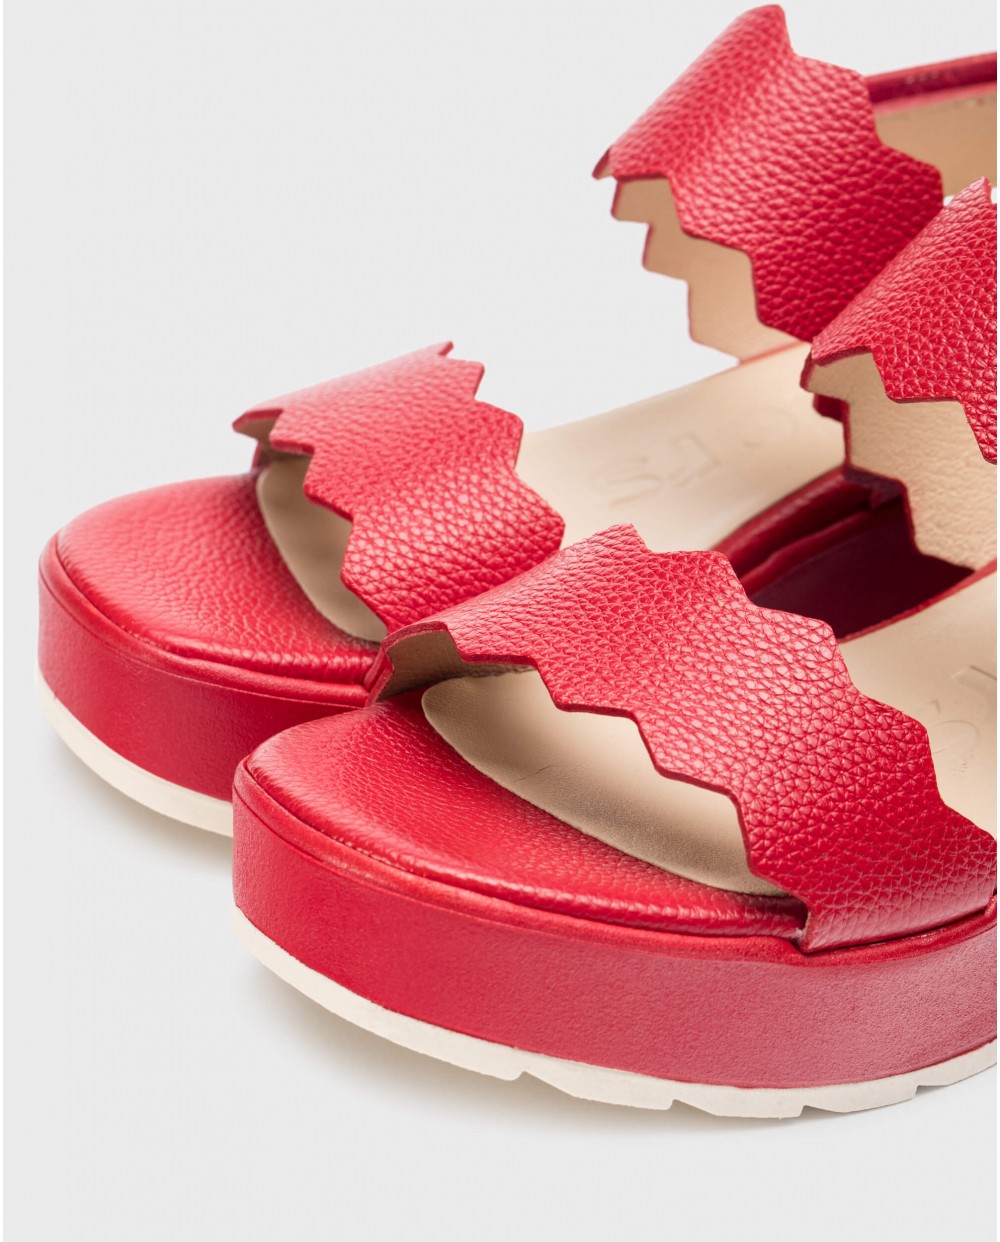 Red Púrpura sandals